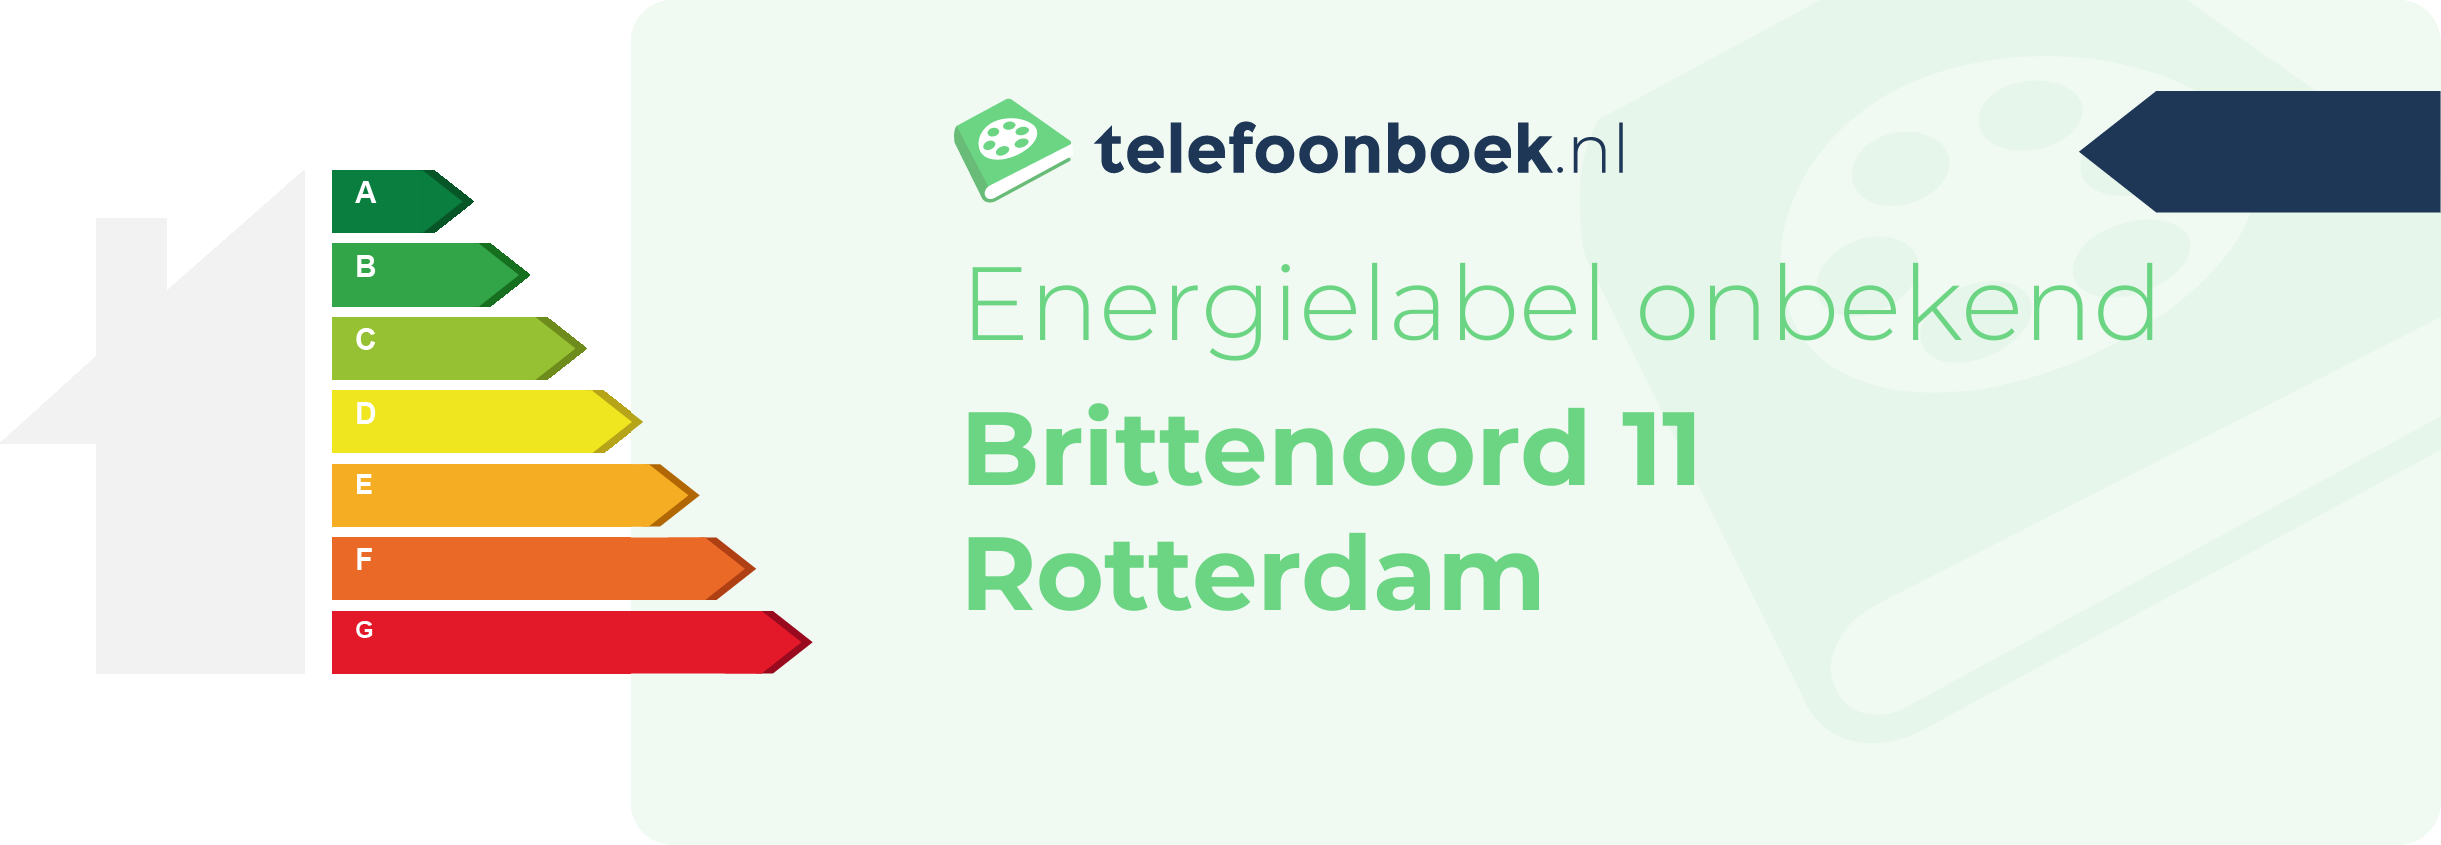 Energielabel Brittenoord 11 Rotterdam